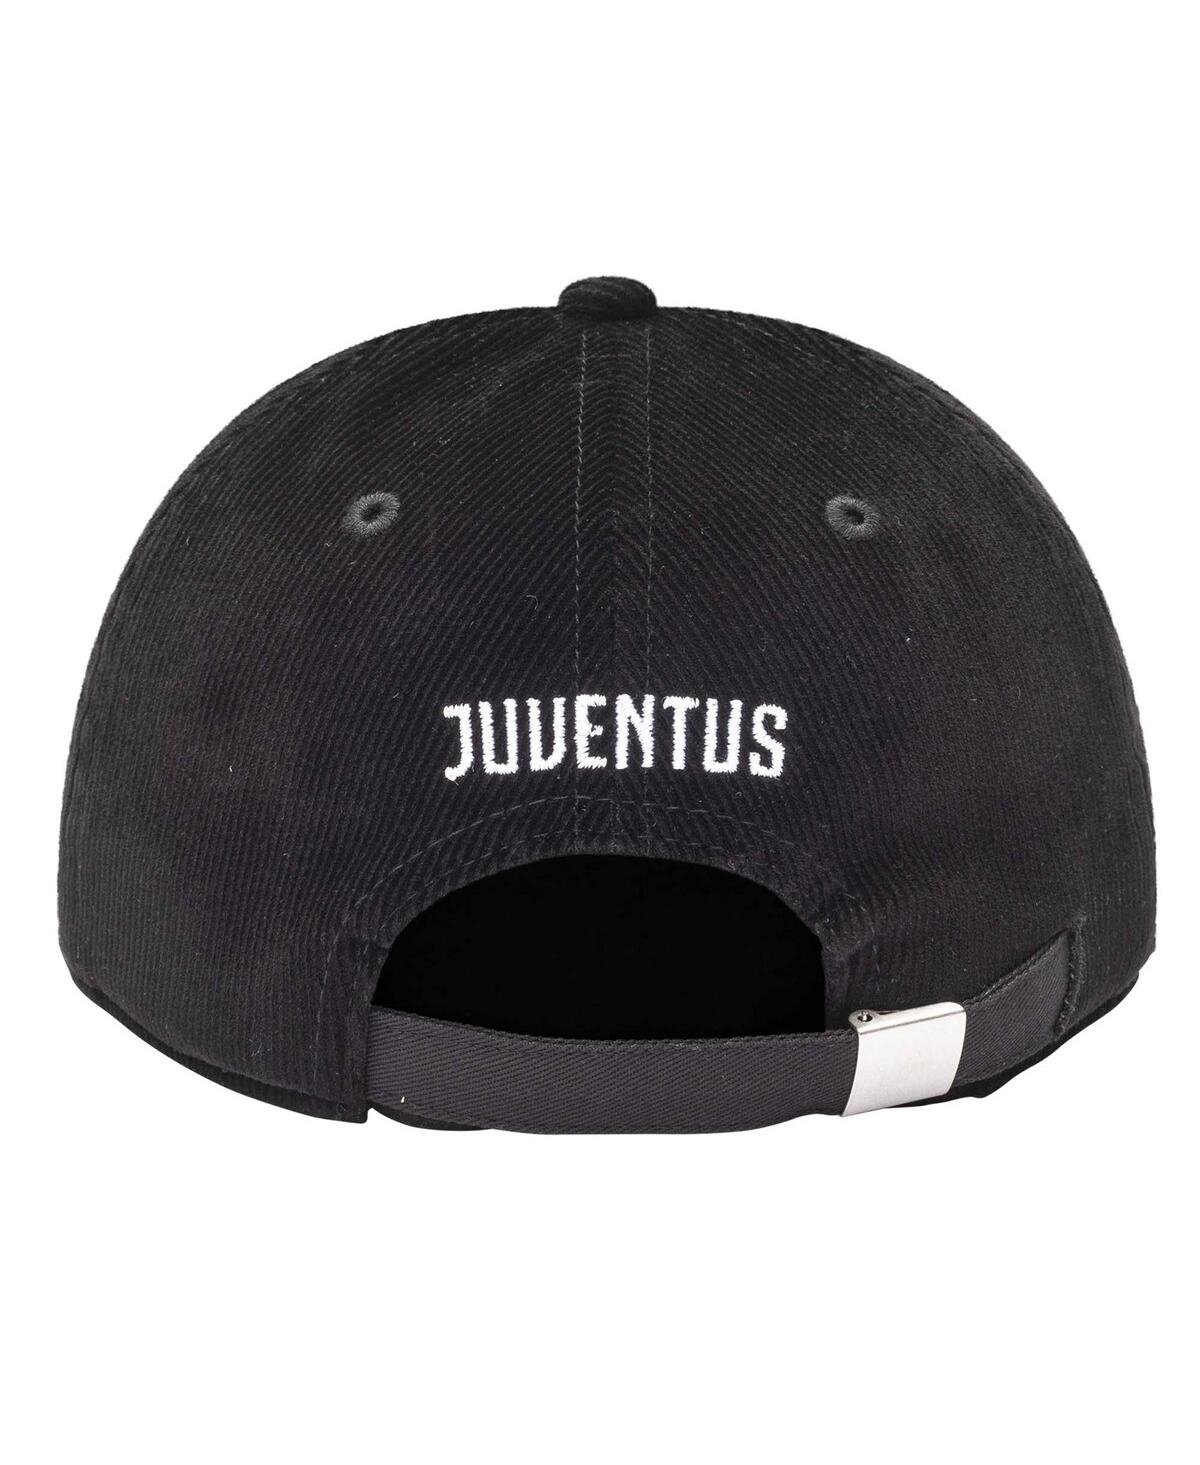 Shop Fan Ink Men's Black Juventus Casuals Classic Adjustable Hat